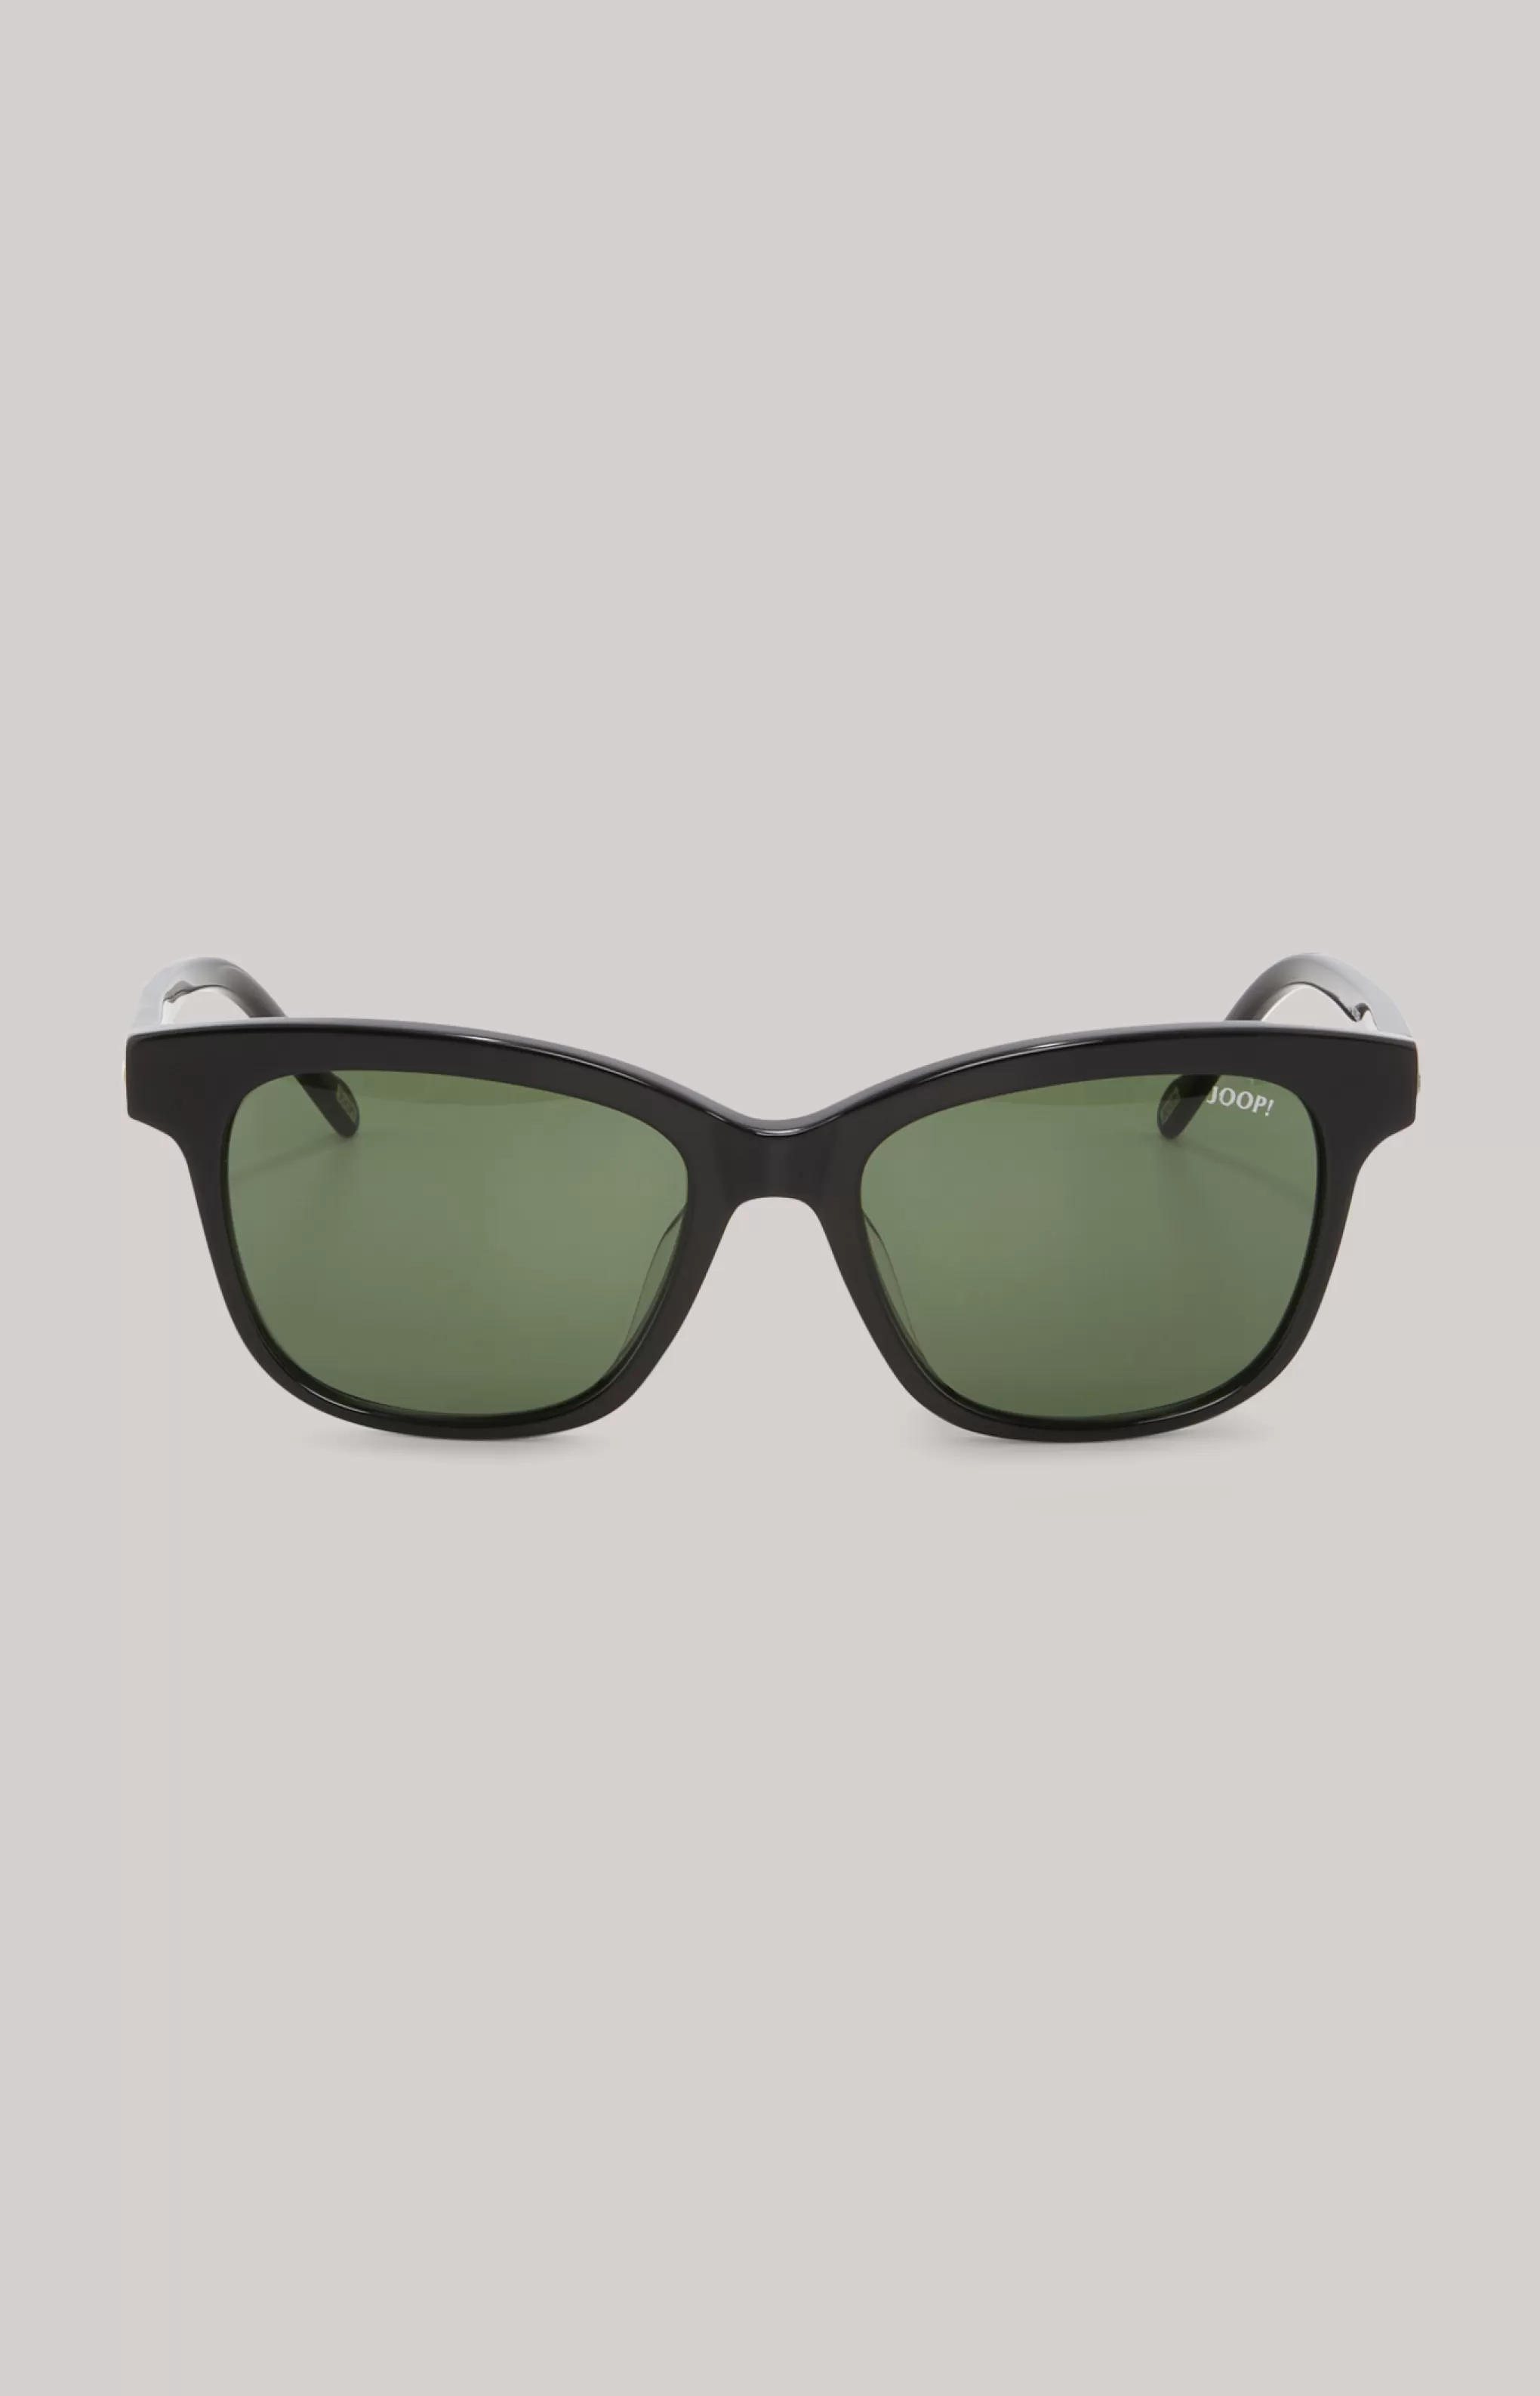 Sunglasses*JOOP Sunglasses Black/Green Sunglasses